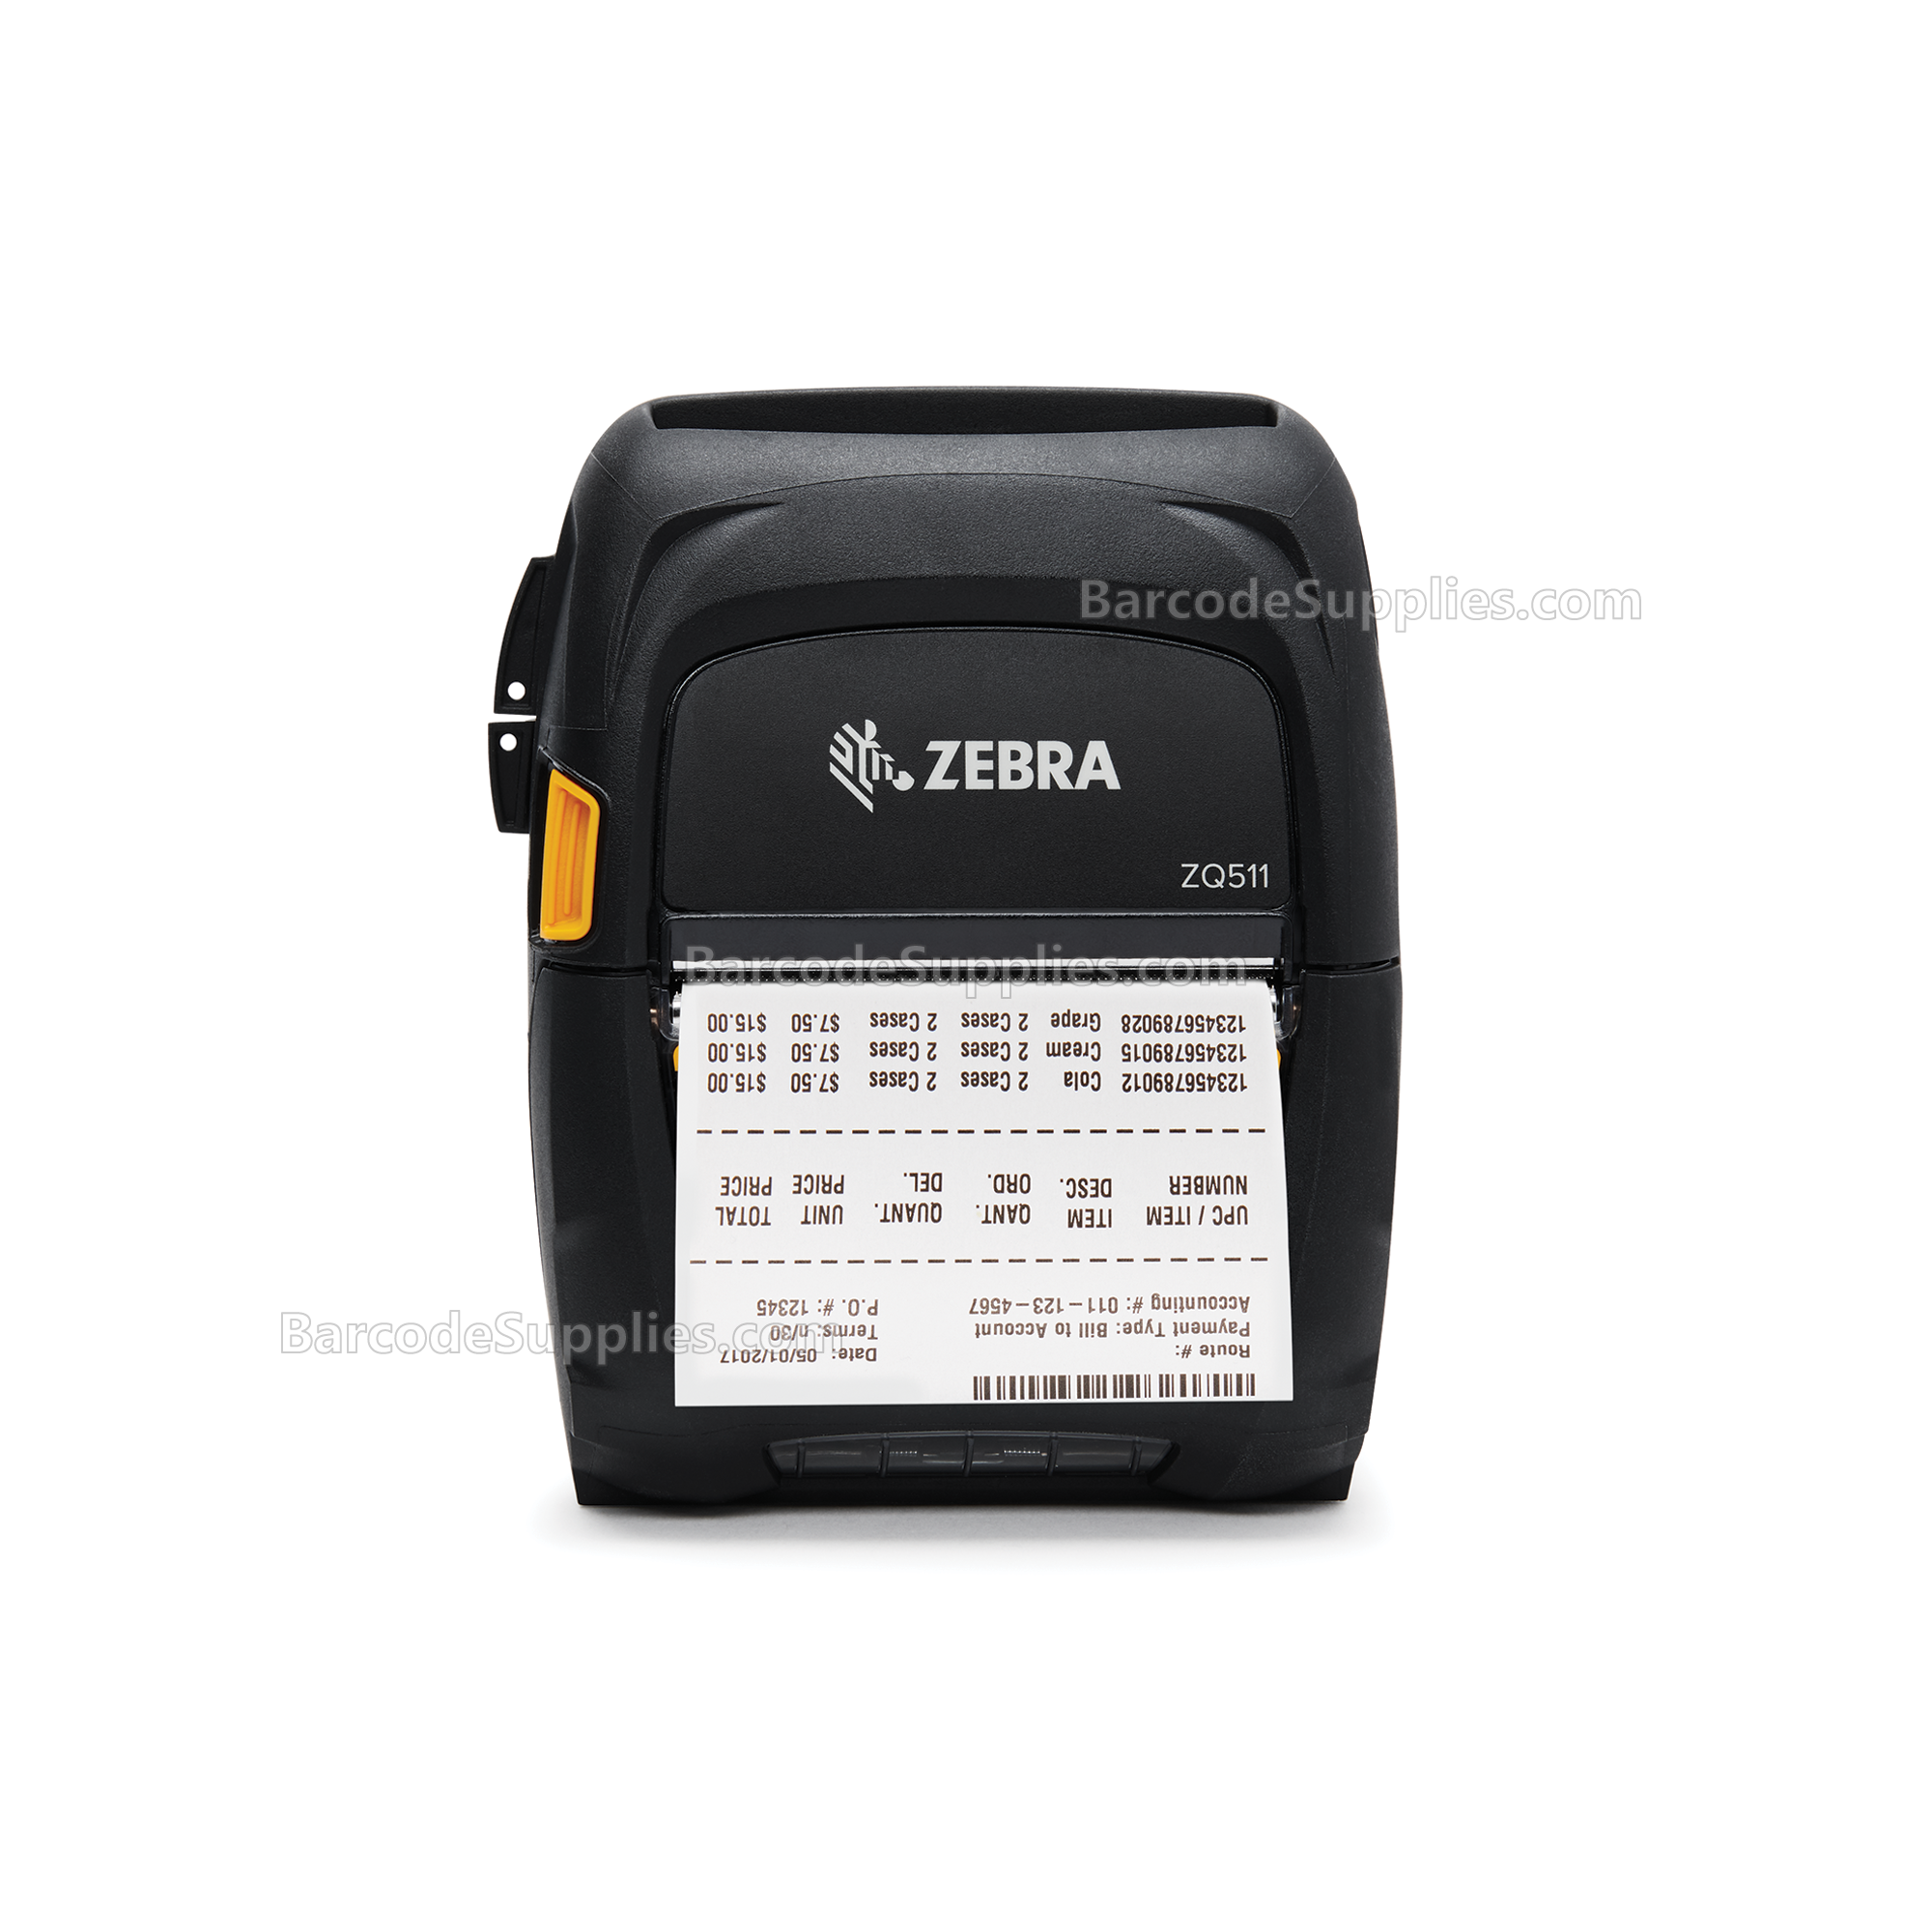 Zebra ZQ511 Mobile Printer - media width 3.15/80mm; English/Latin fonts, 802.11ac/Bluetooth 4.1, no battery, US/Canada certs - MPN: ZQ51-BUW0010-00